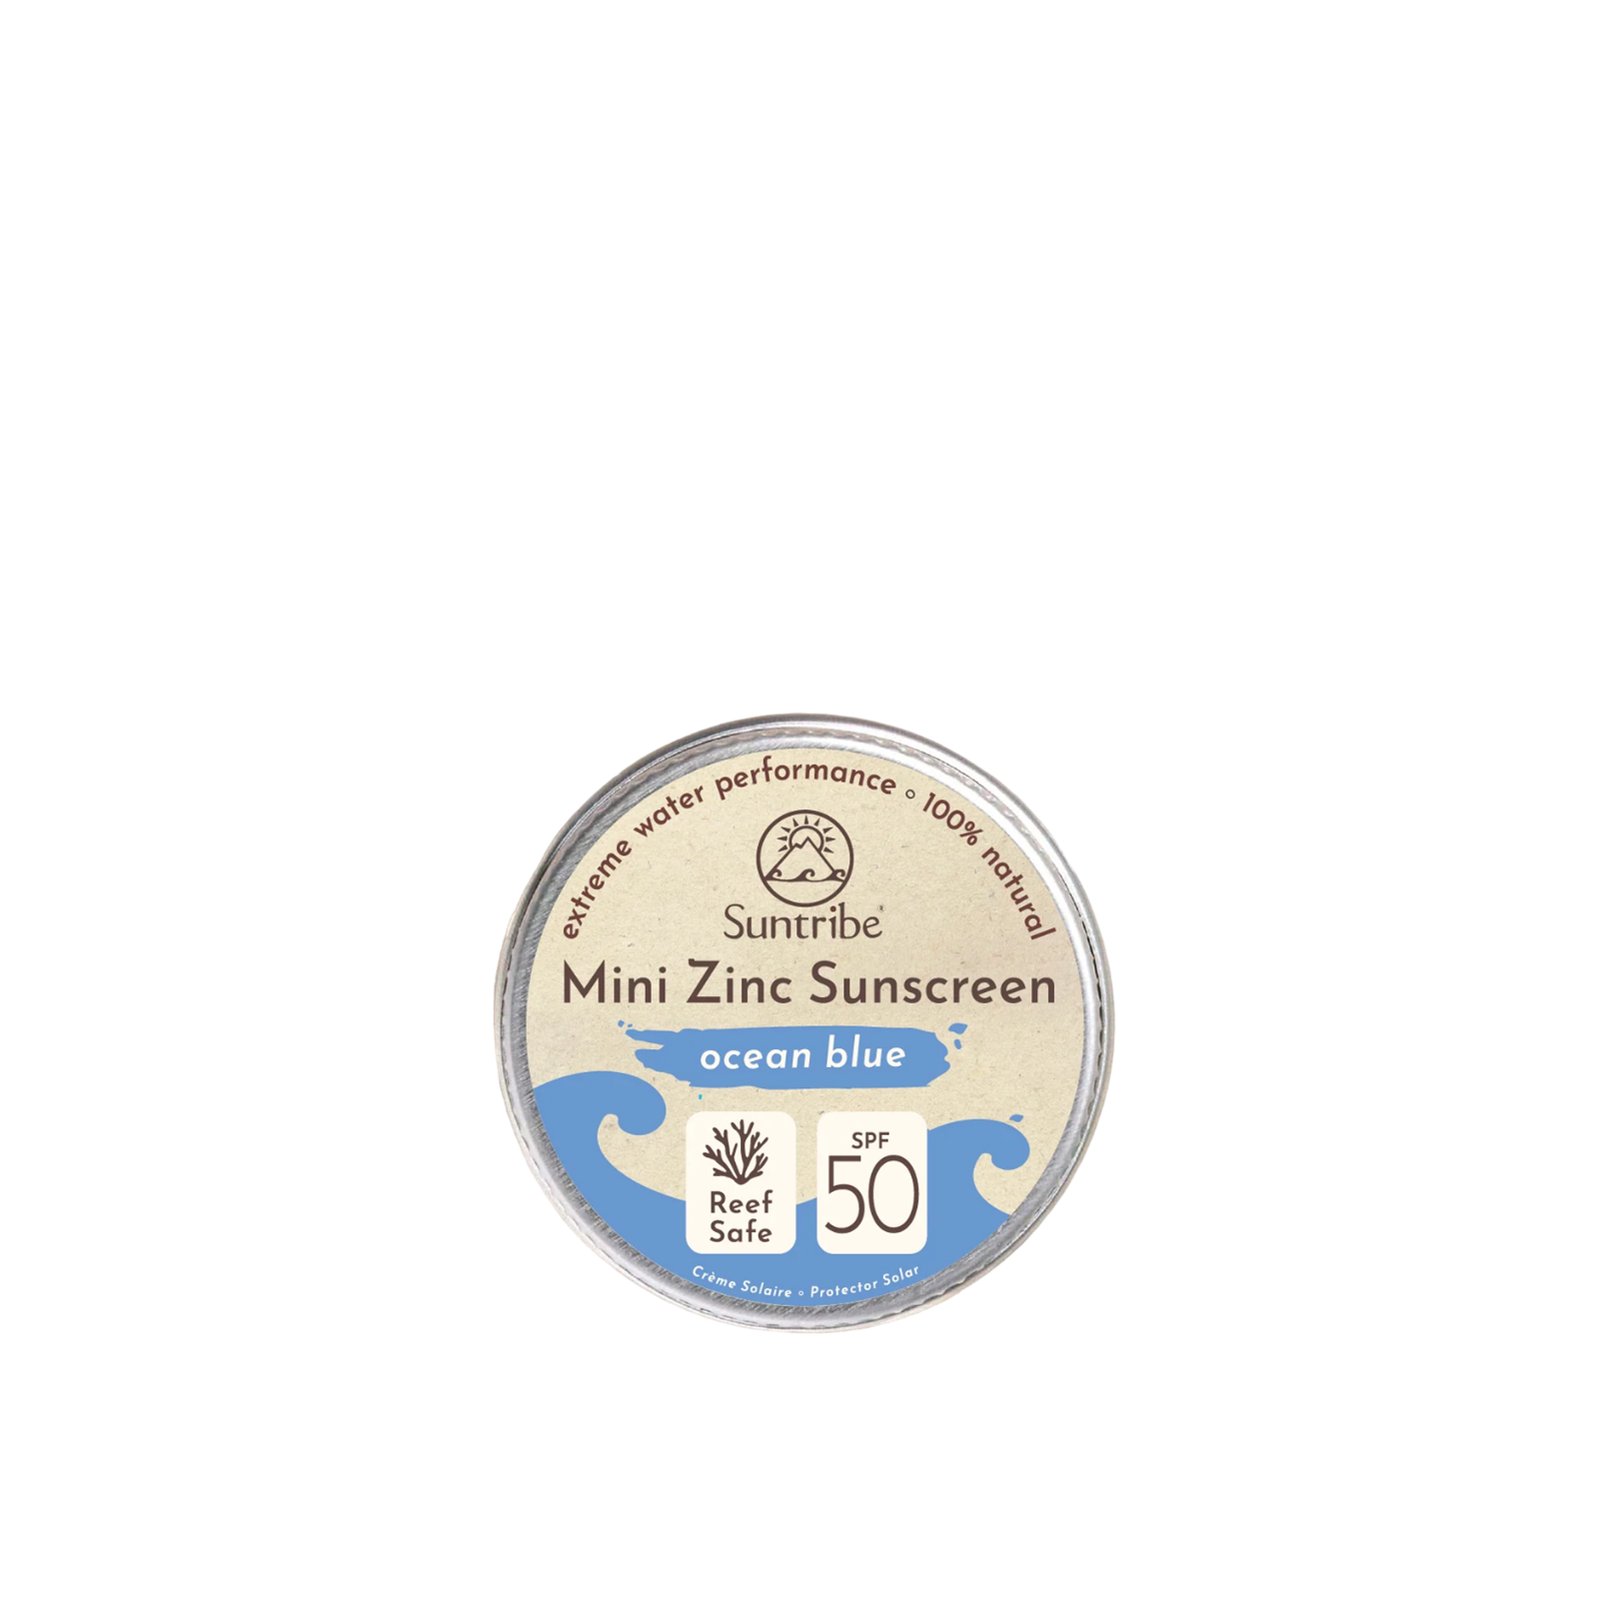 Suntribe Mini Zinc Sunscreen SPF50 Ocean Blue 15g (0.52oz)